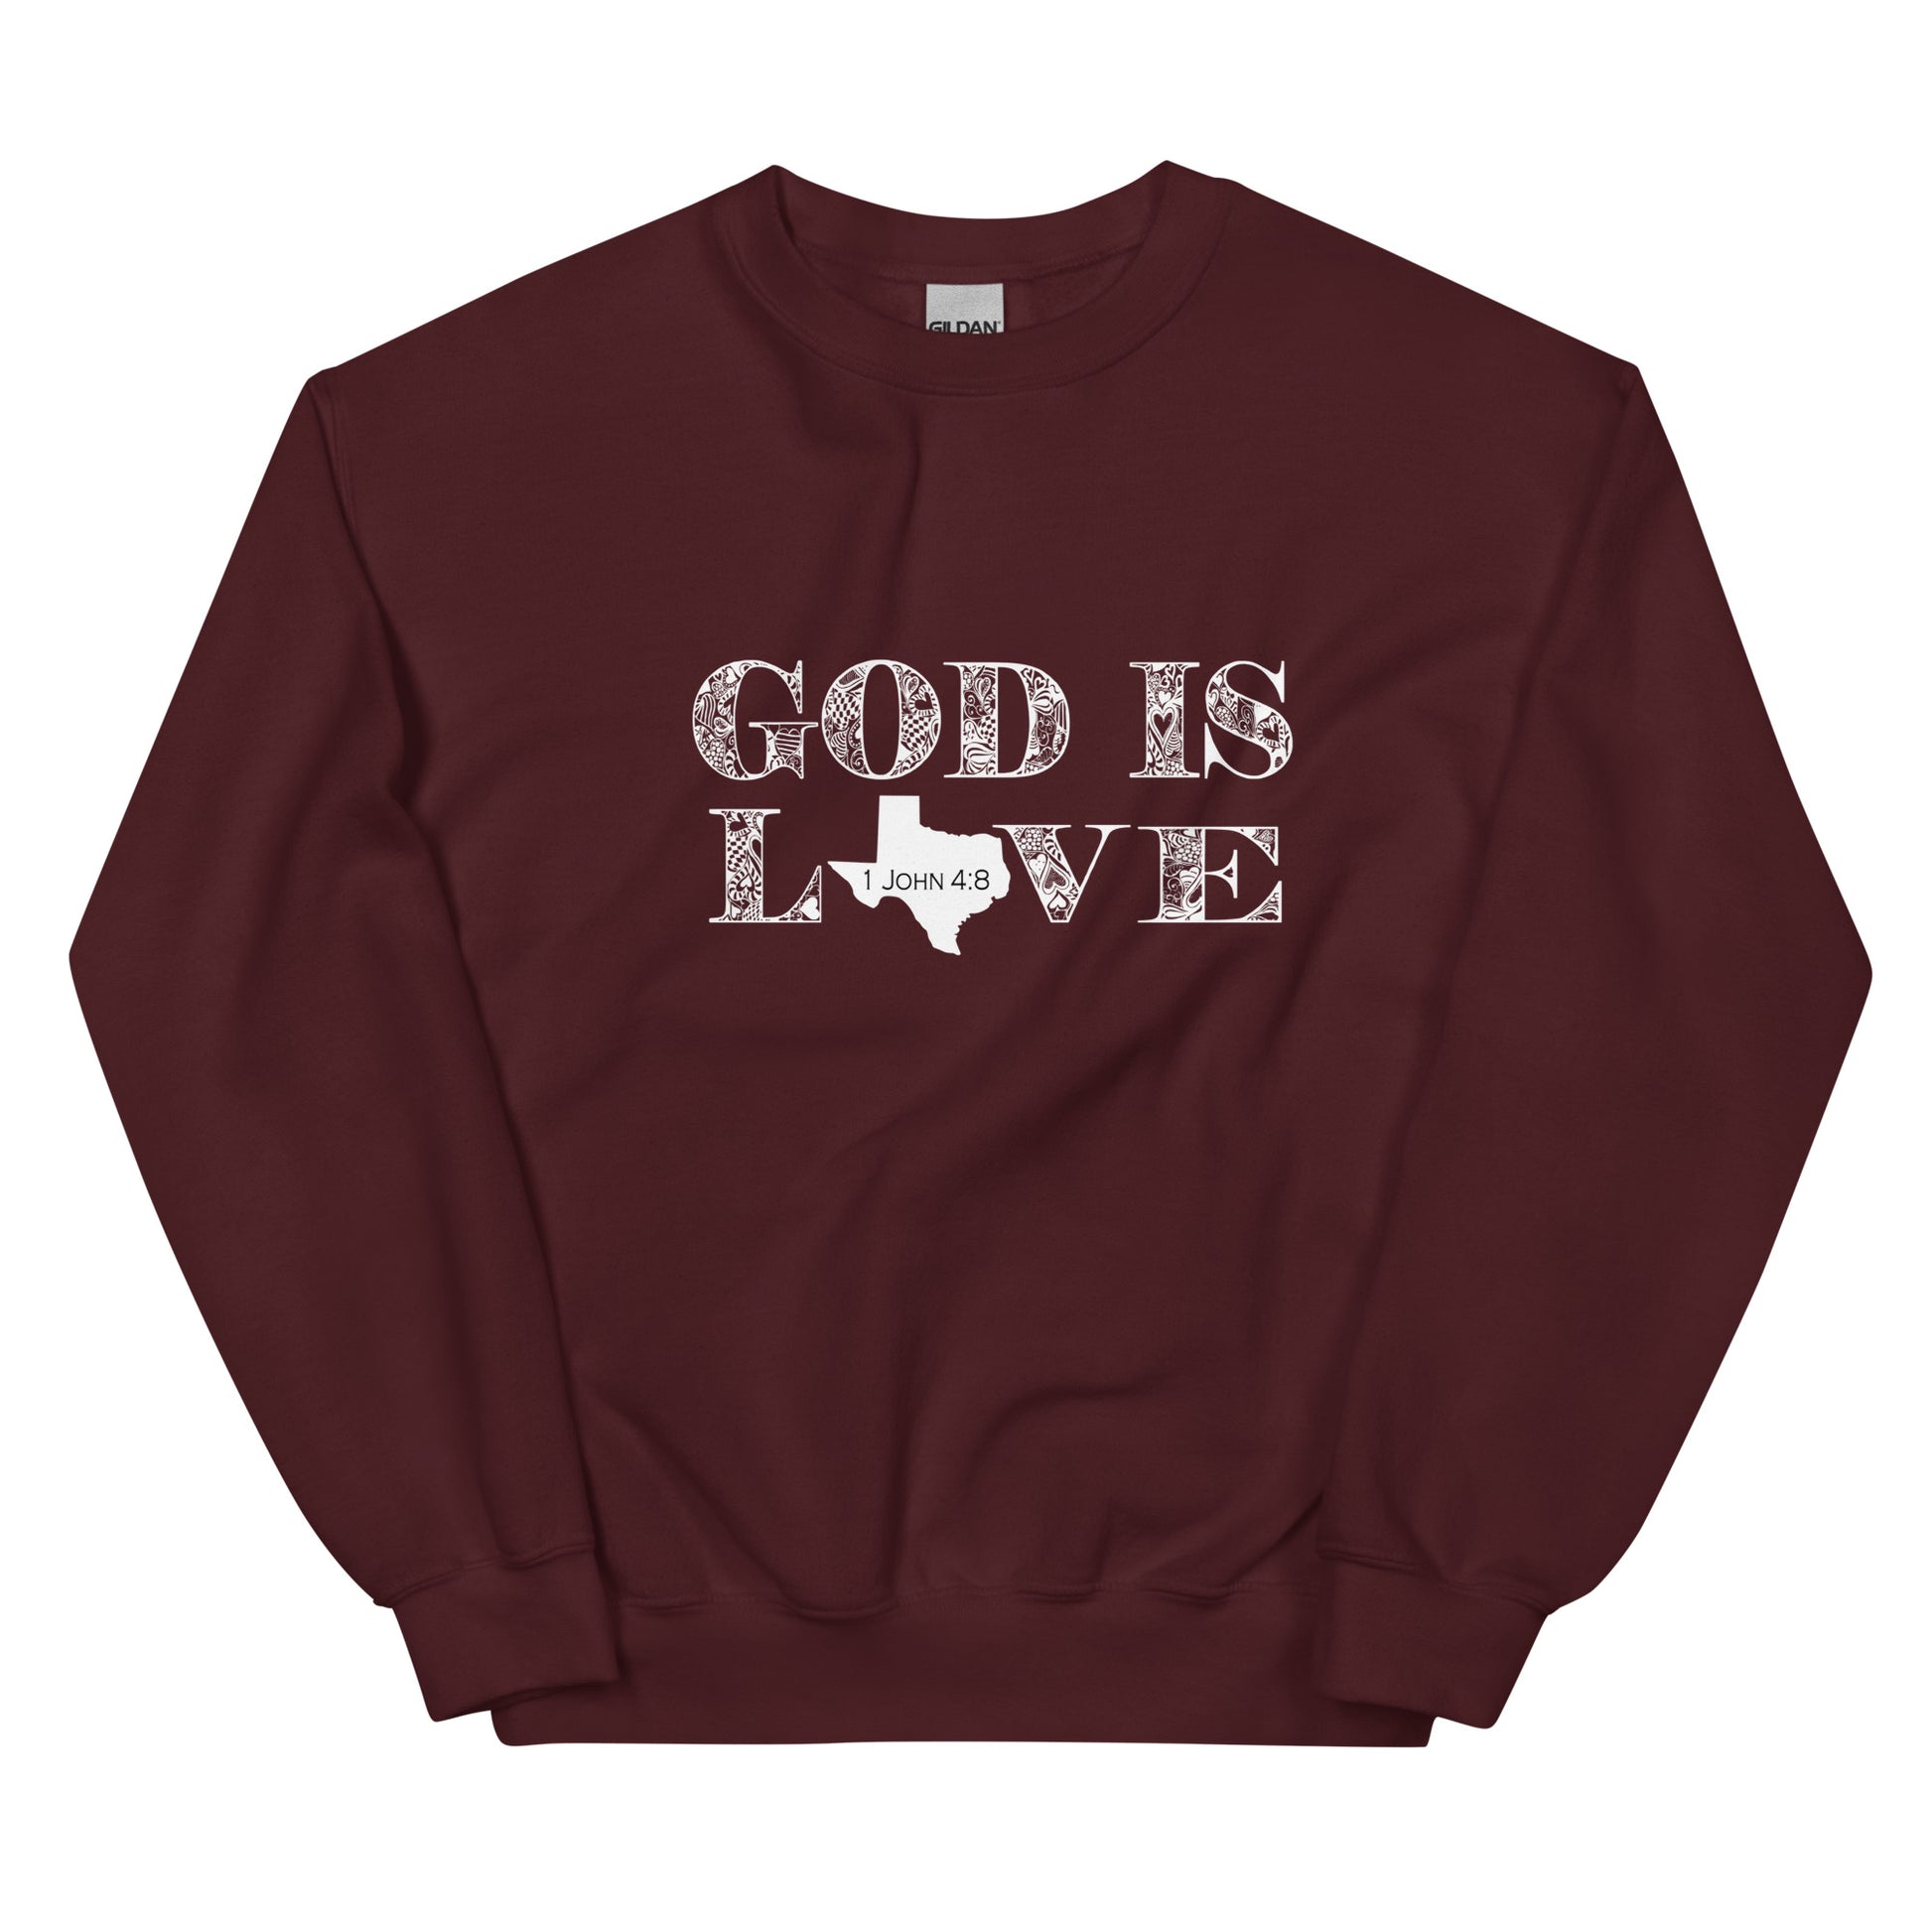 1 John 4:8 God is Love Unisex Texas Sweatshirt in Maroon - front view